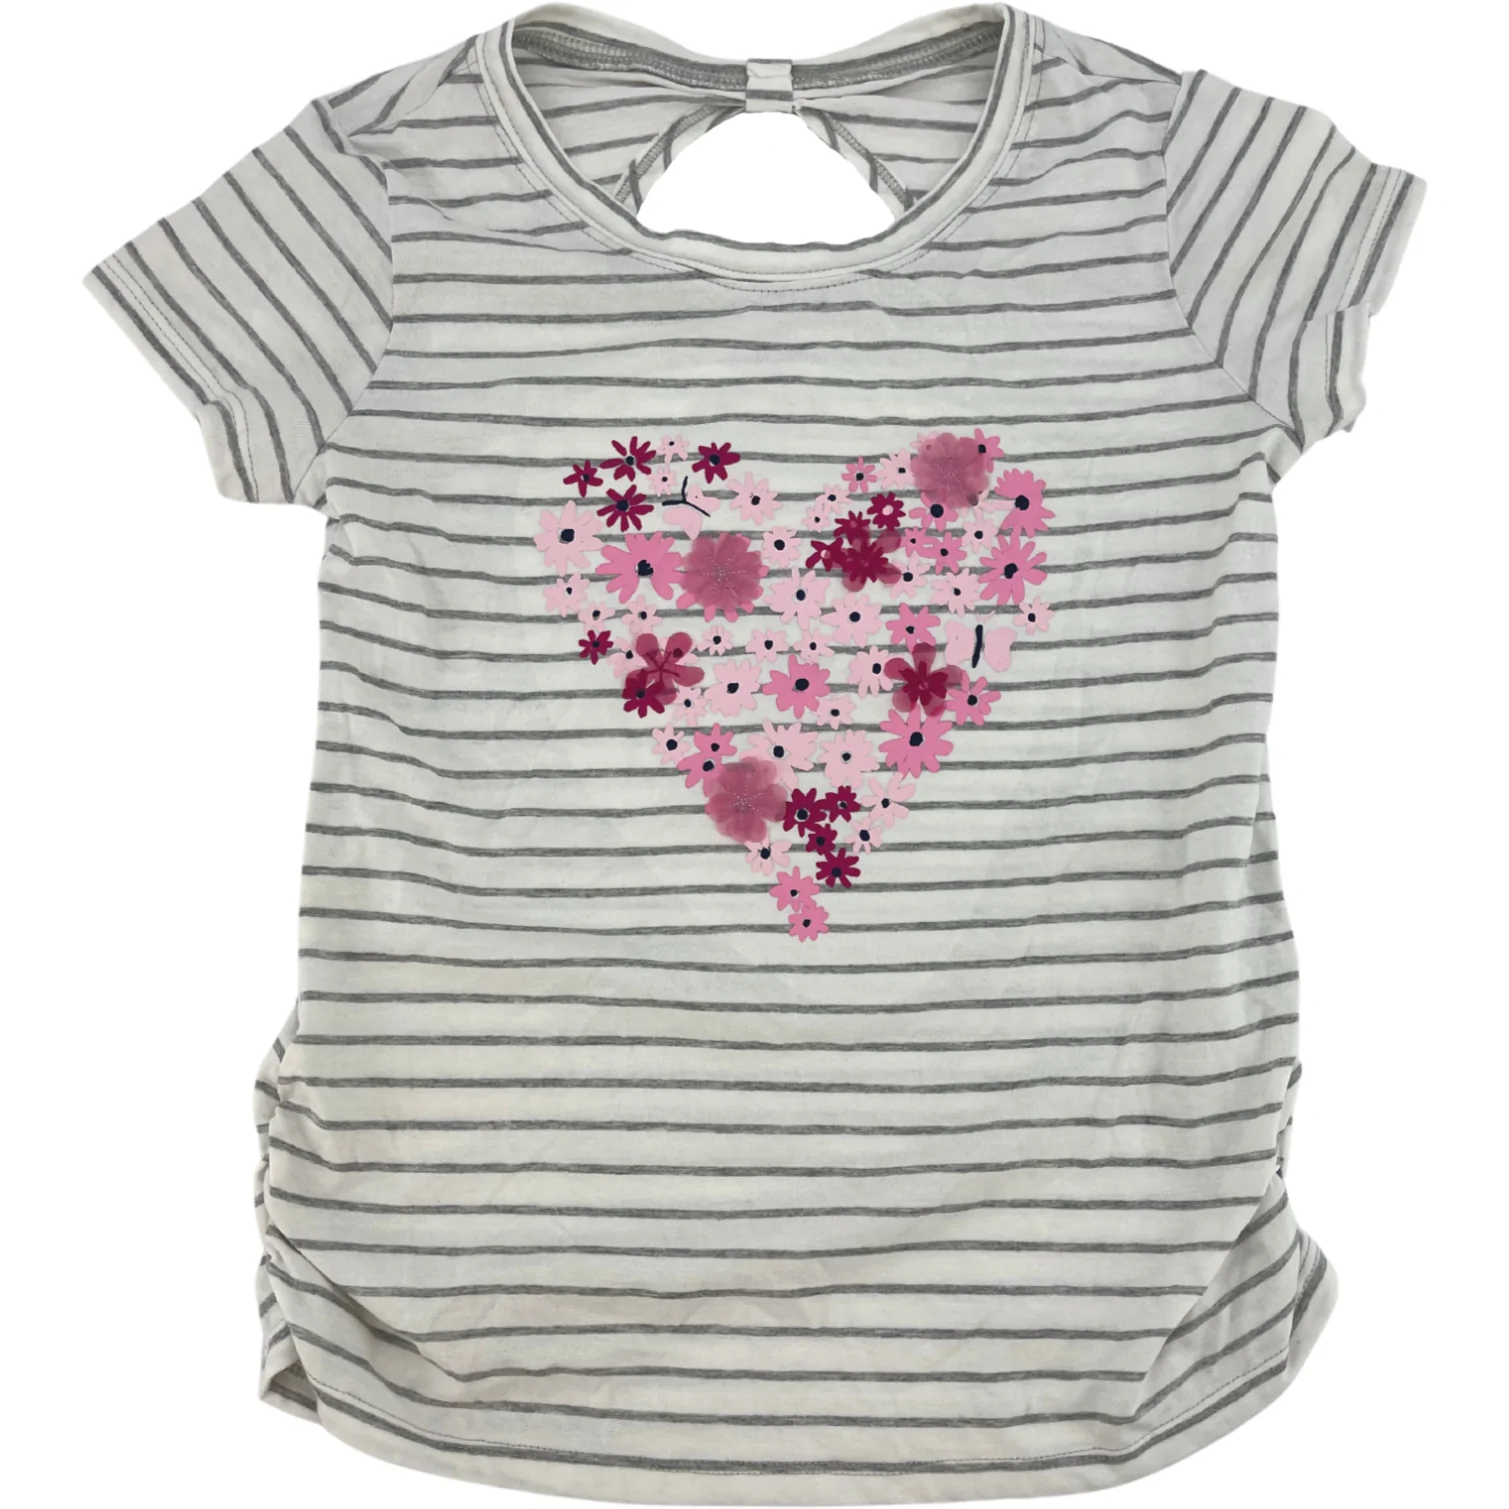 CRB Girl Girl's T-Shirt / Grey & White / Stripes / Size Medium